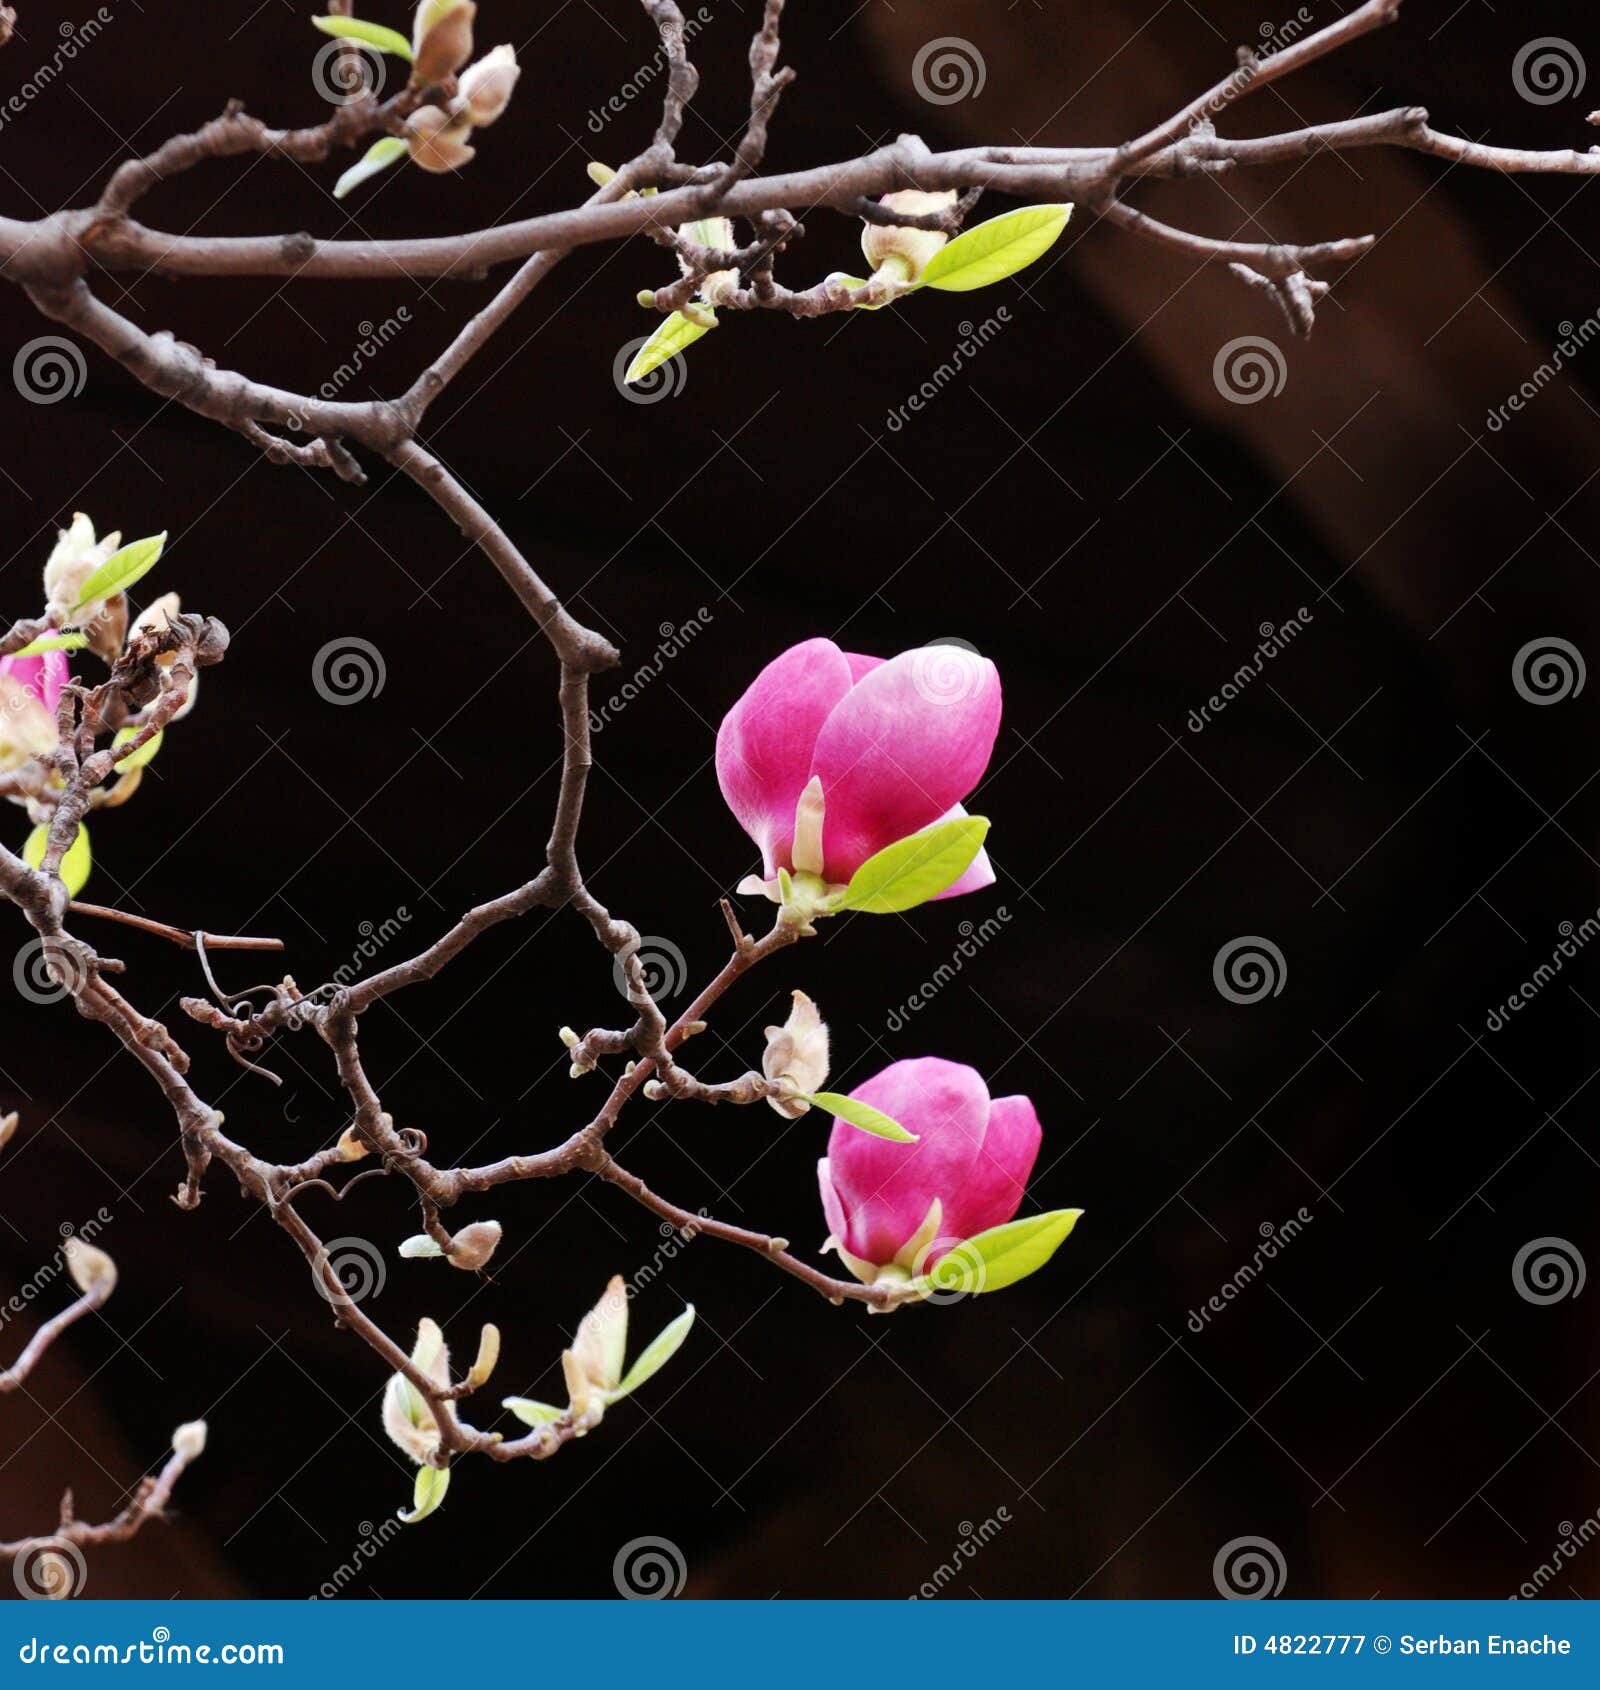 pink magnolia blooms